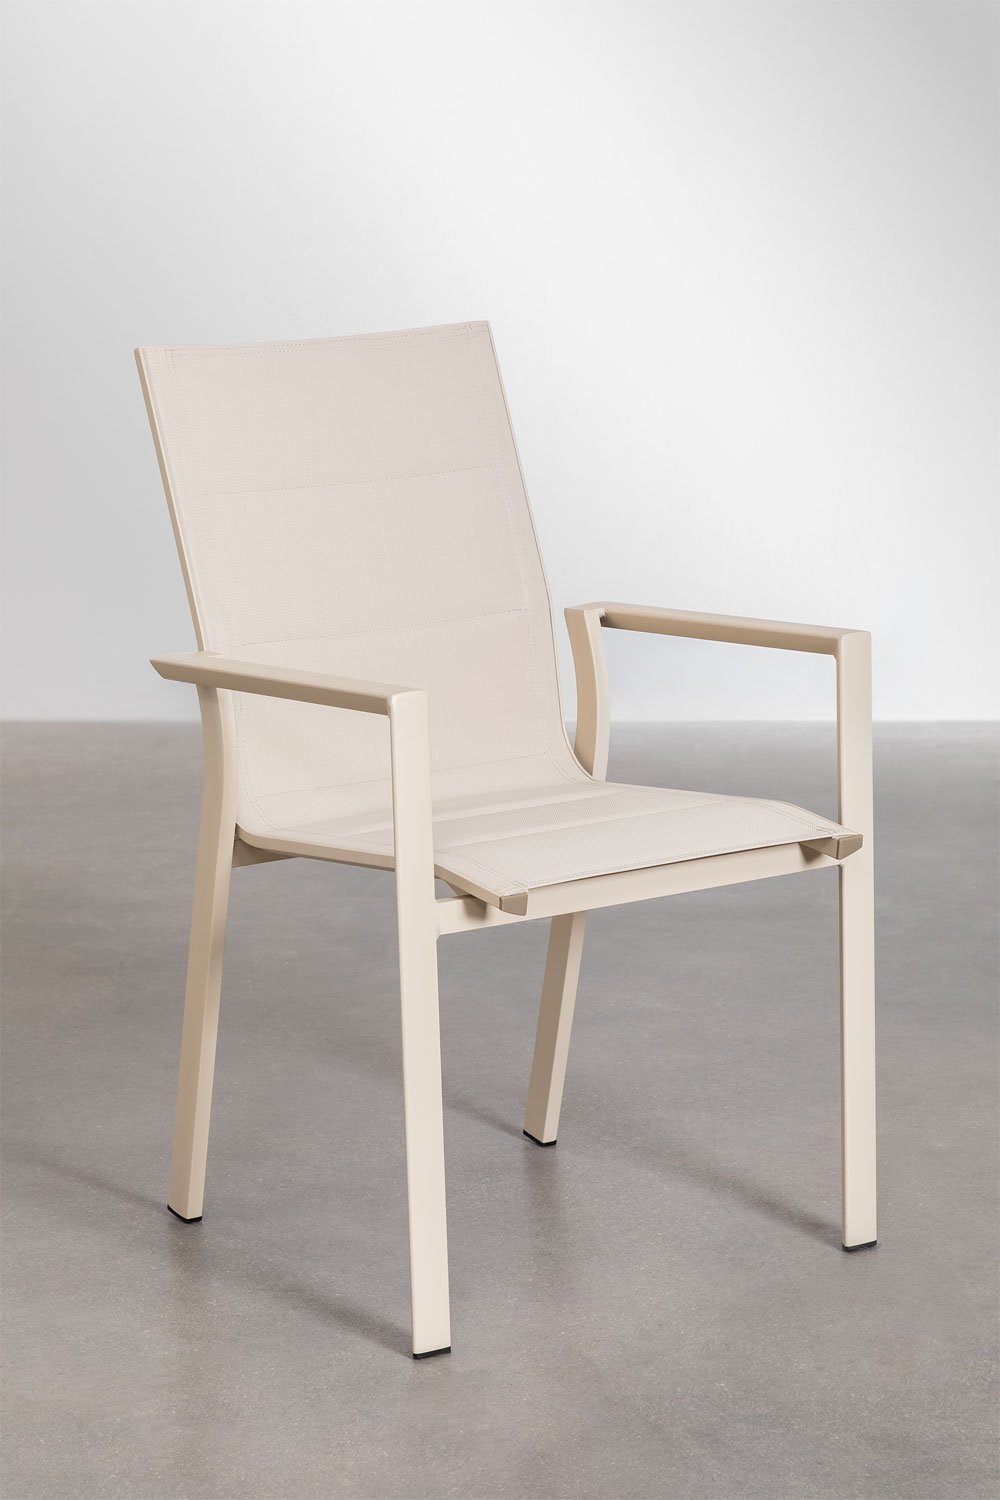 Pack 4 sillas de jardín de aluminio con apoyabrazos